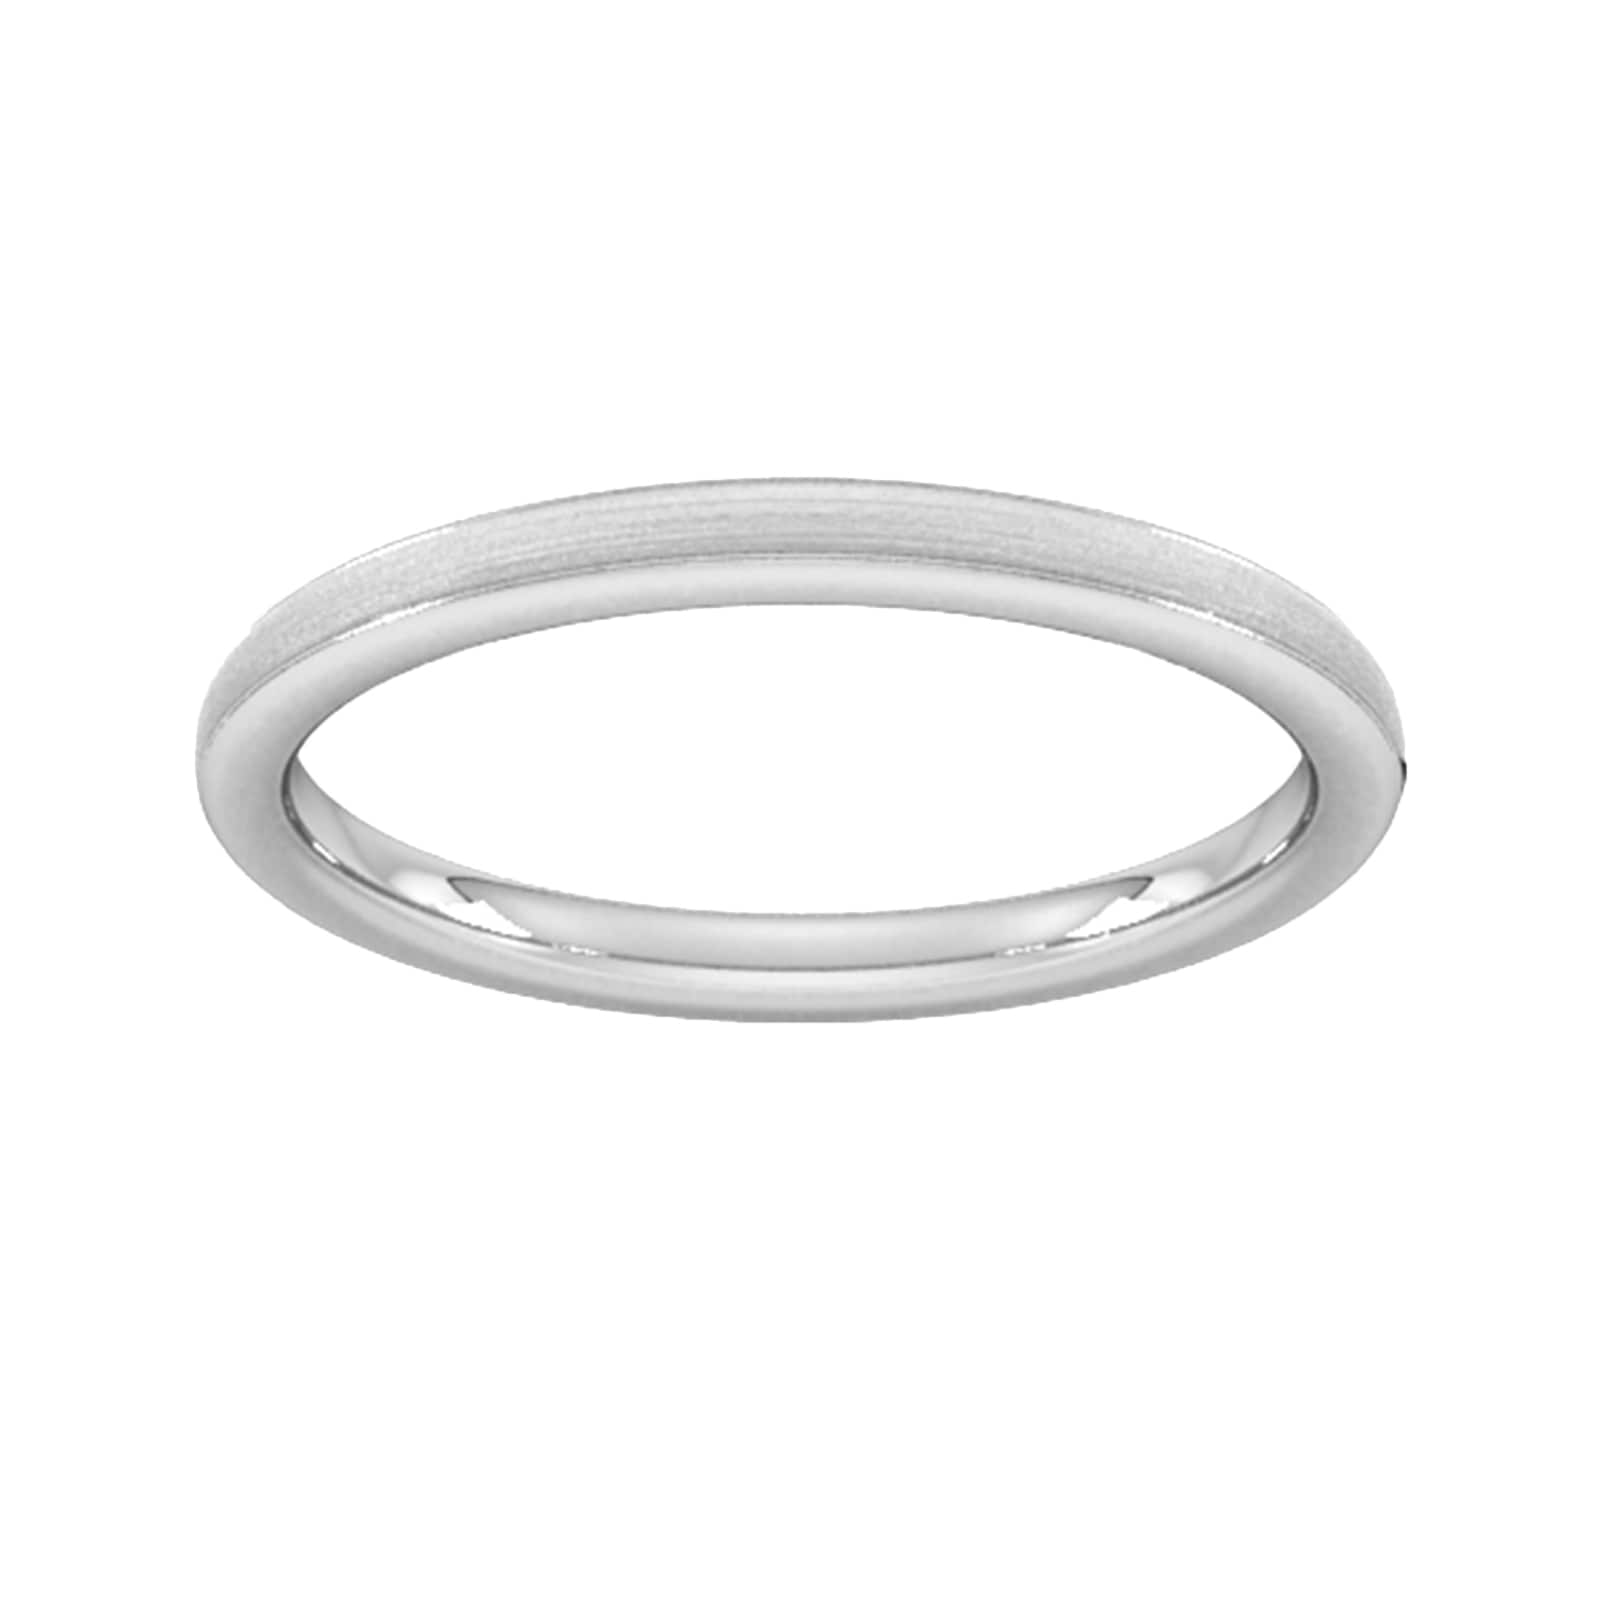 2mm Slight Court Heavy Matt Centre With Grooves Wedding Ring In 18 Carat White Gold - Ring Size J